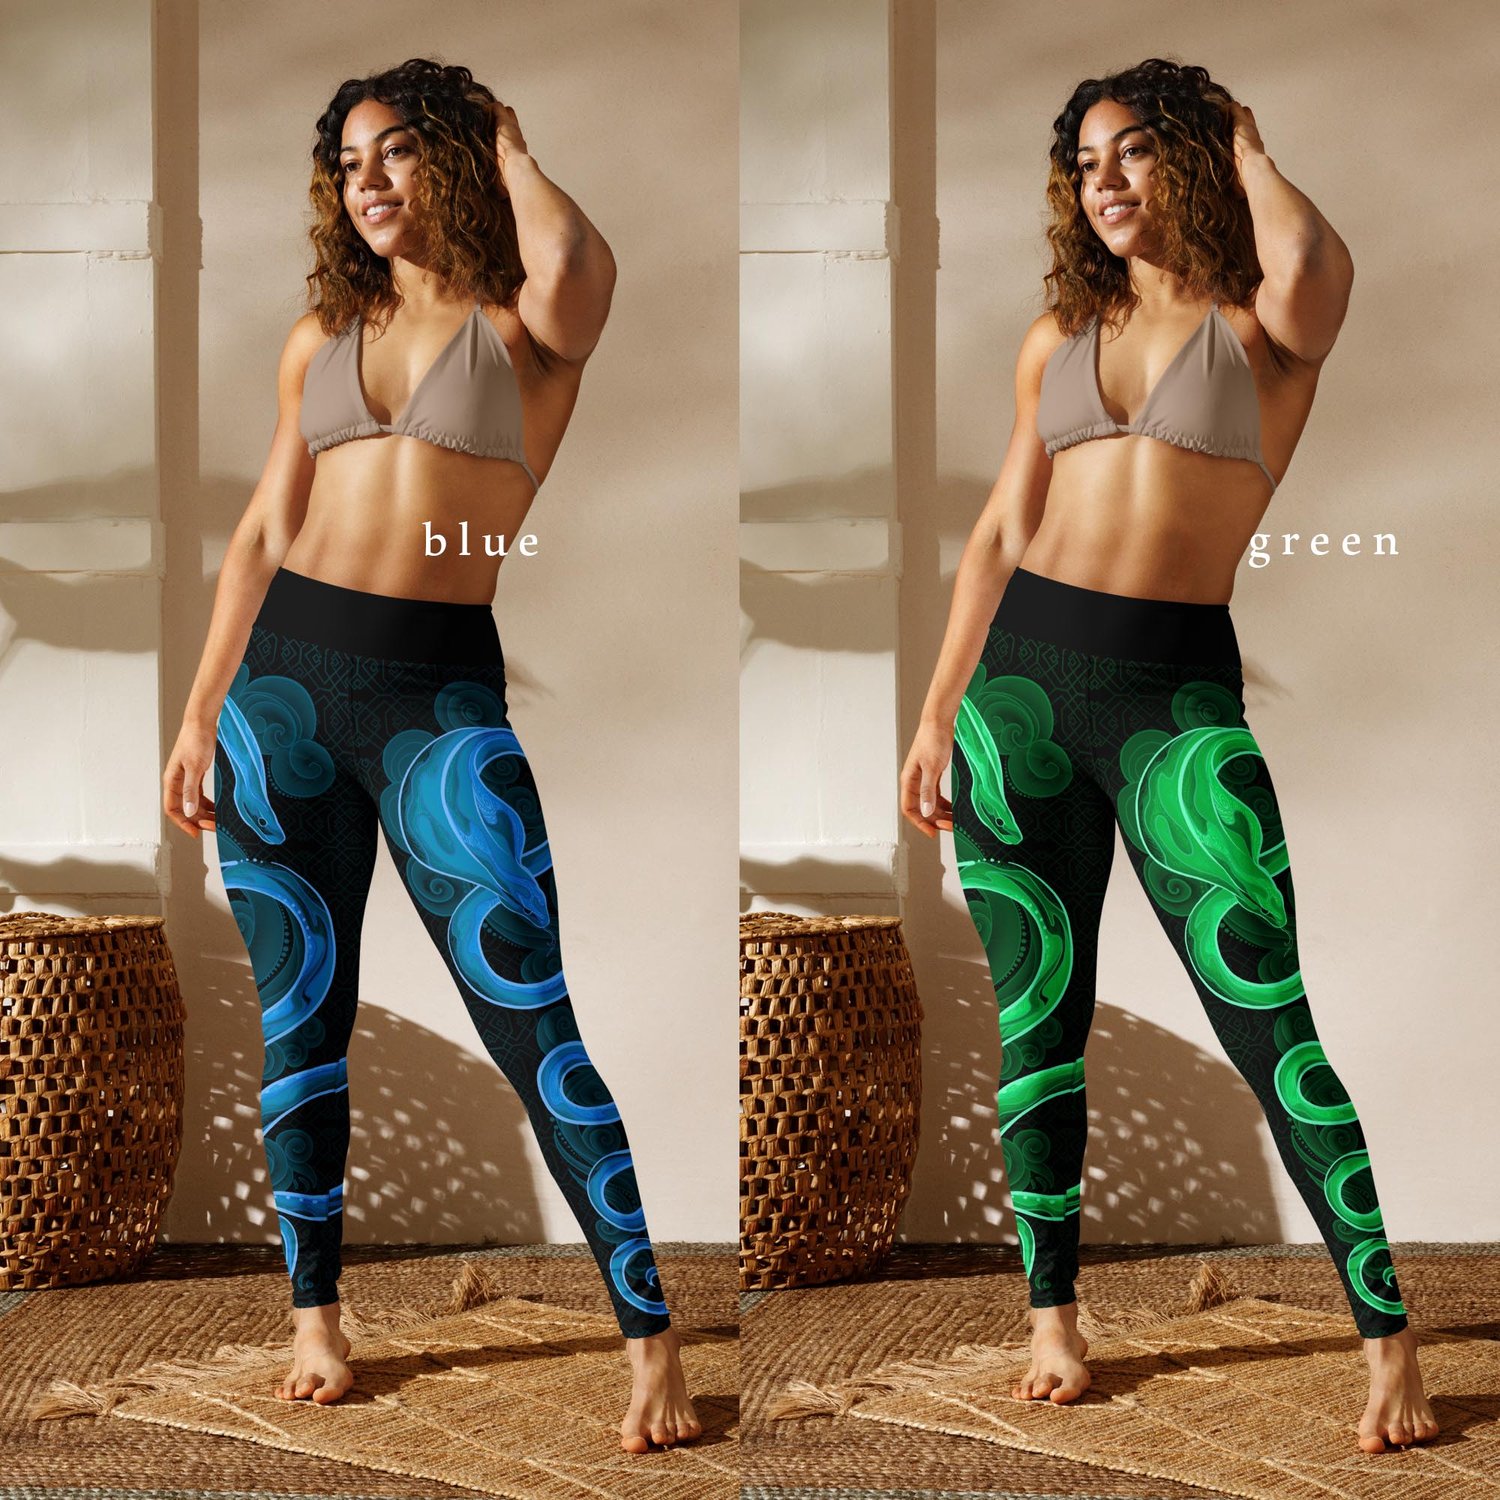 Check Our Art of The Week  Women's Colorful Yoga Pants – Meraki